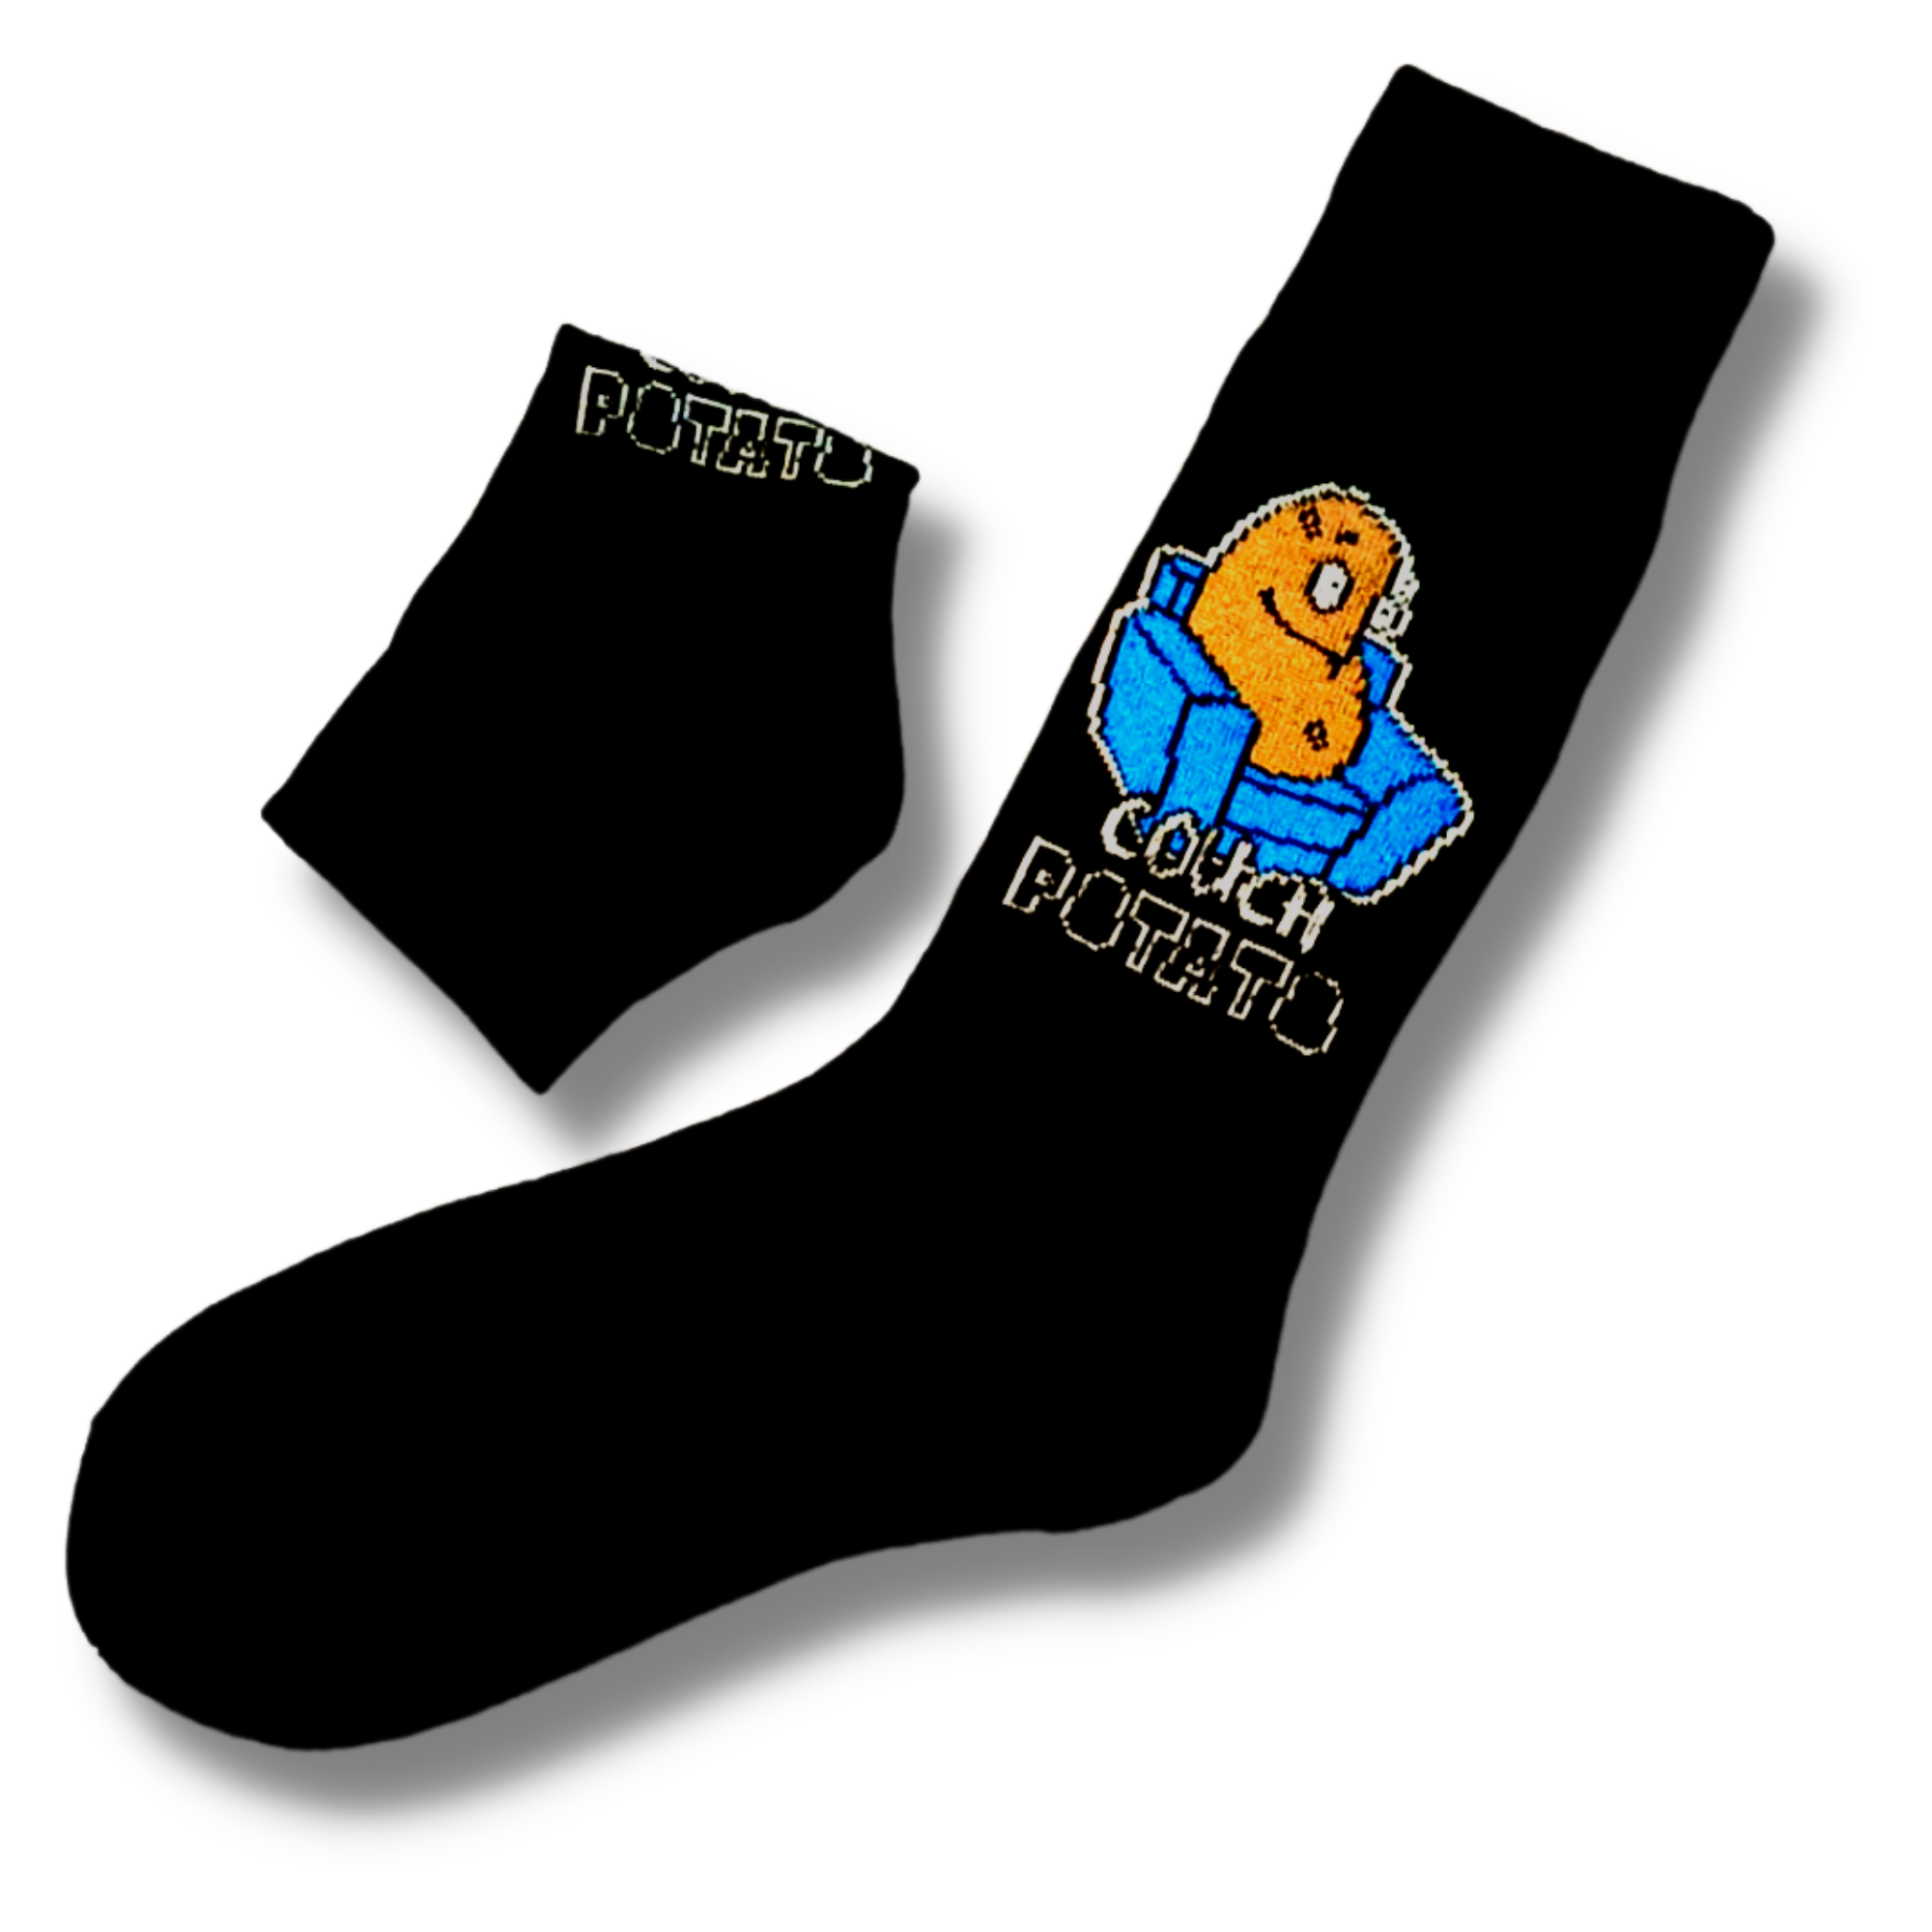 Couch Potato Men's Socks (Size 6-11)